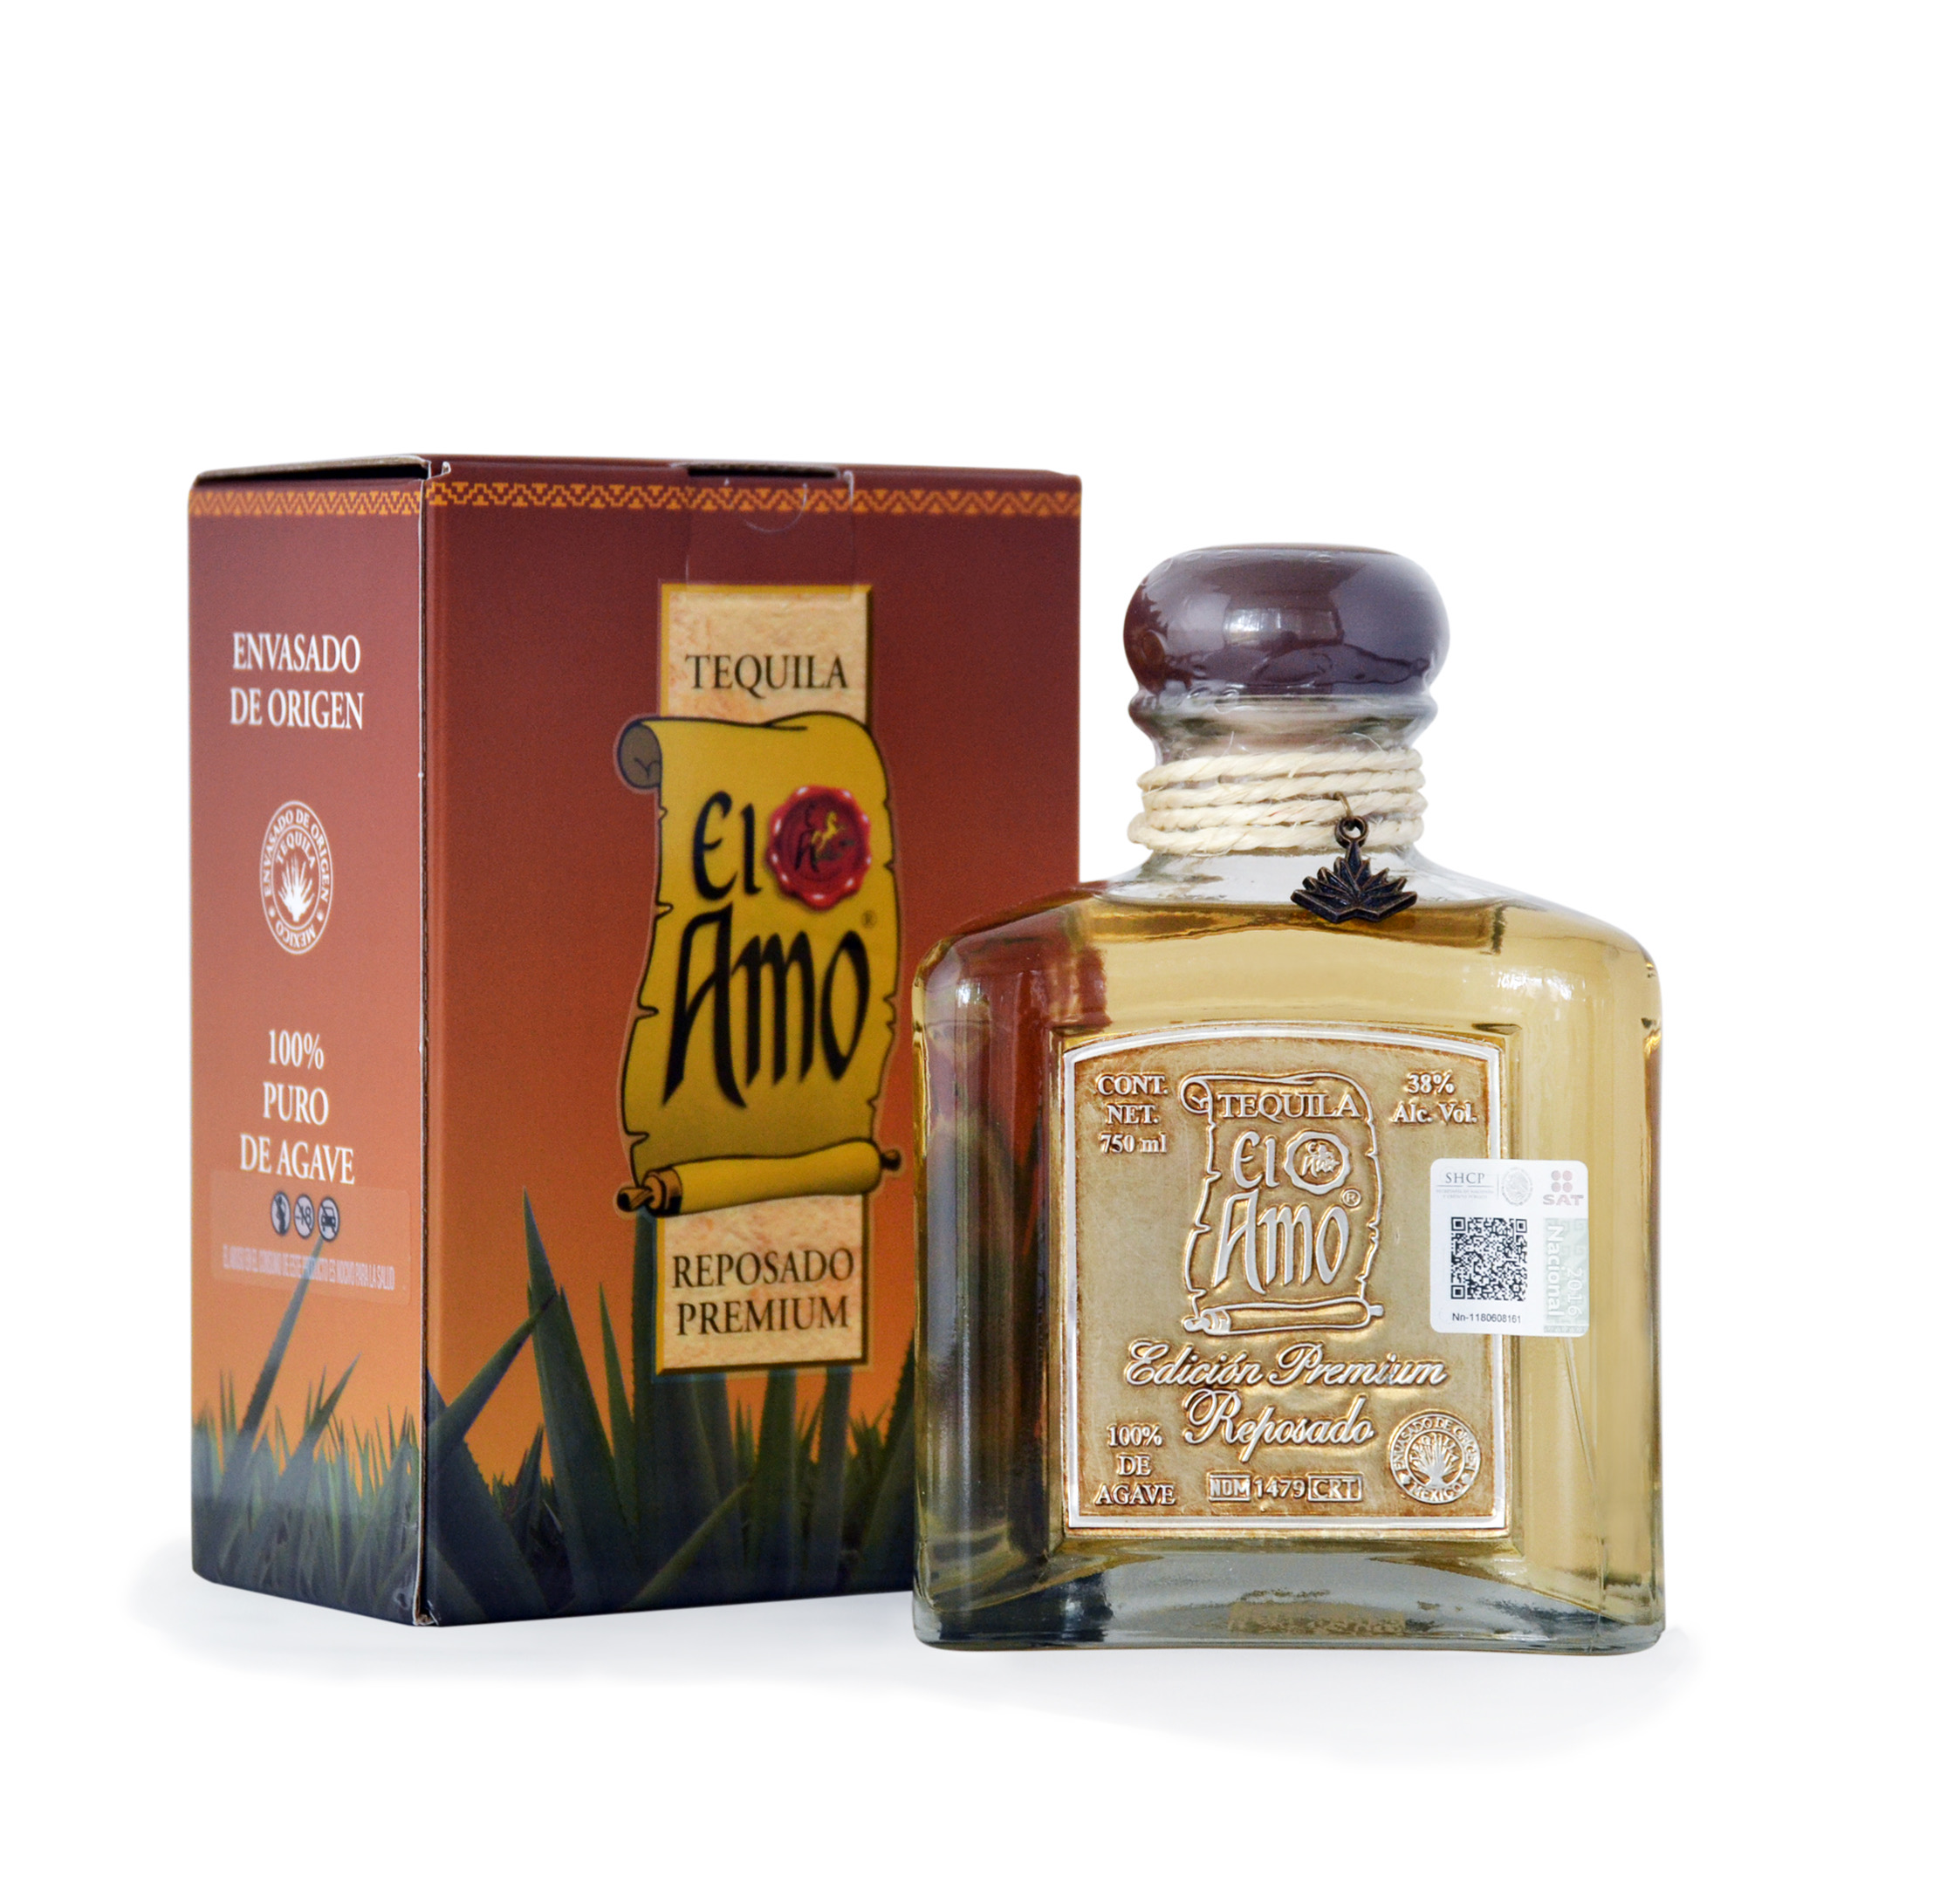 Tequila El Amo Premium Reposado 750ml